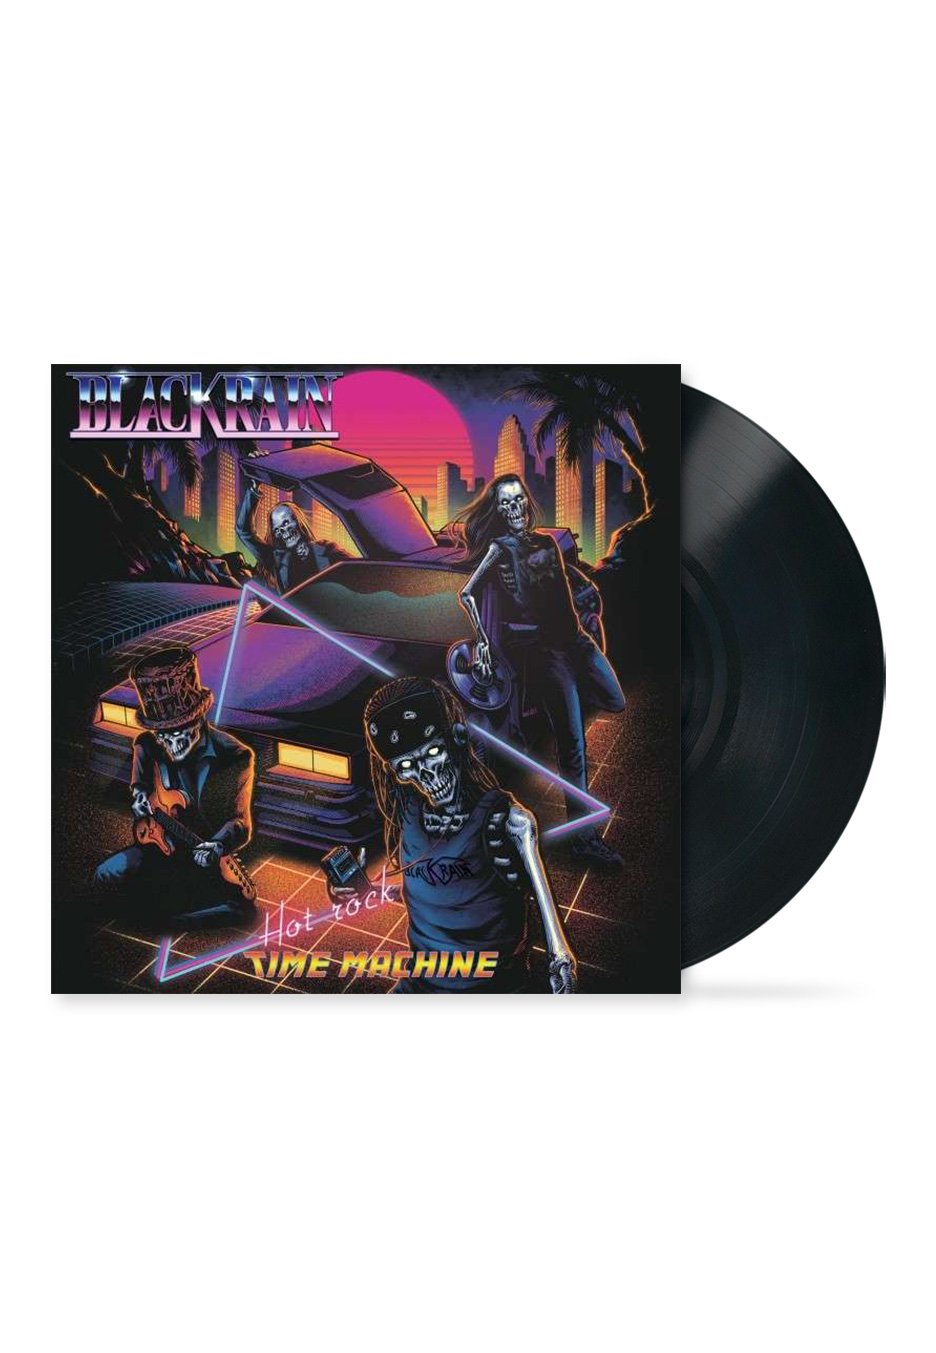 Blackrain - Hot Rock Time Machine - Vinyl